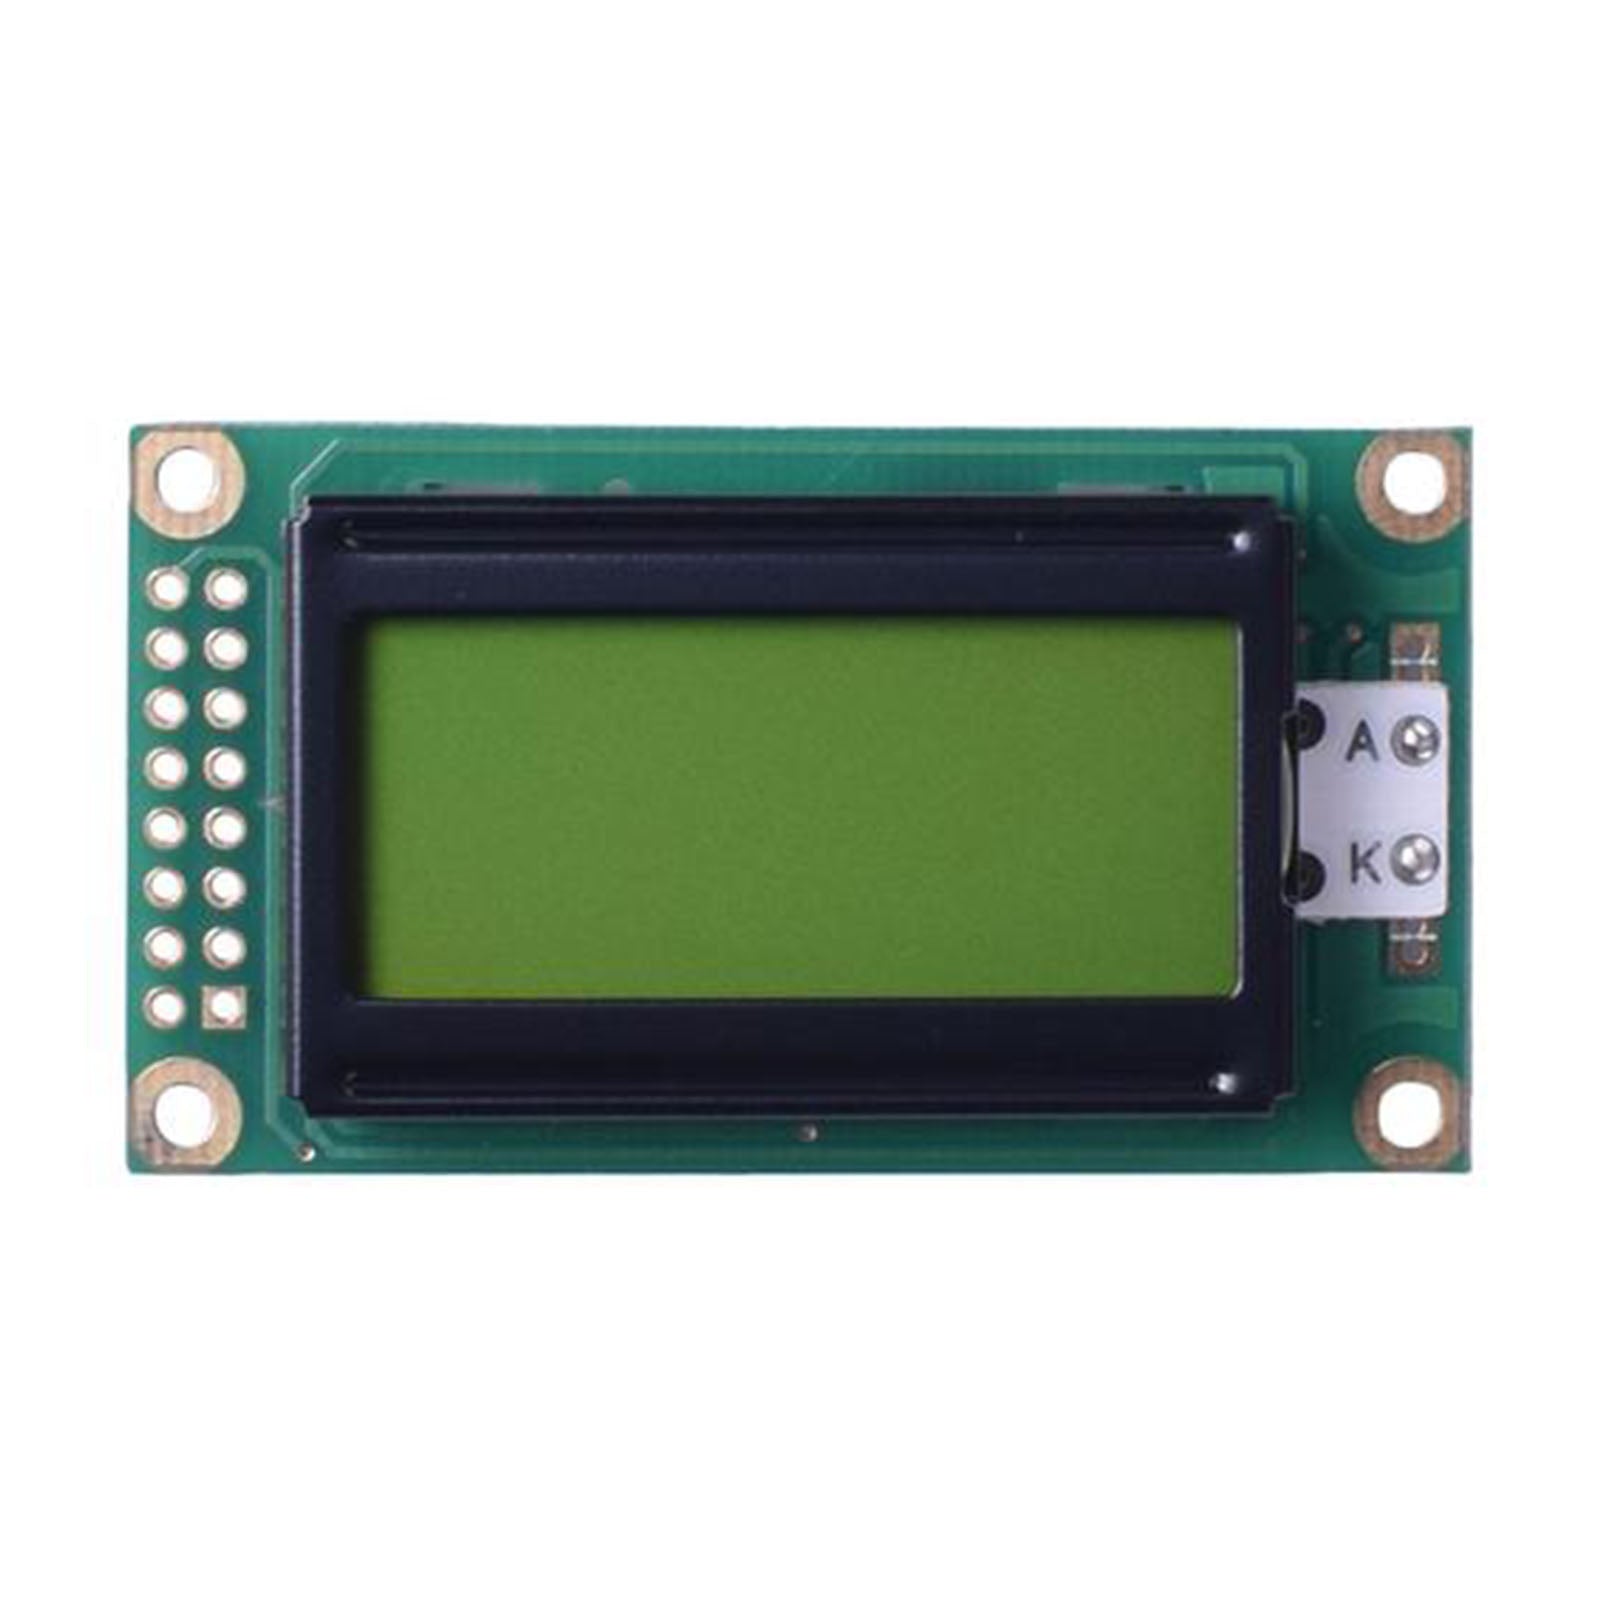 green 8x2 character LCD display module 